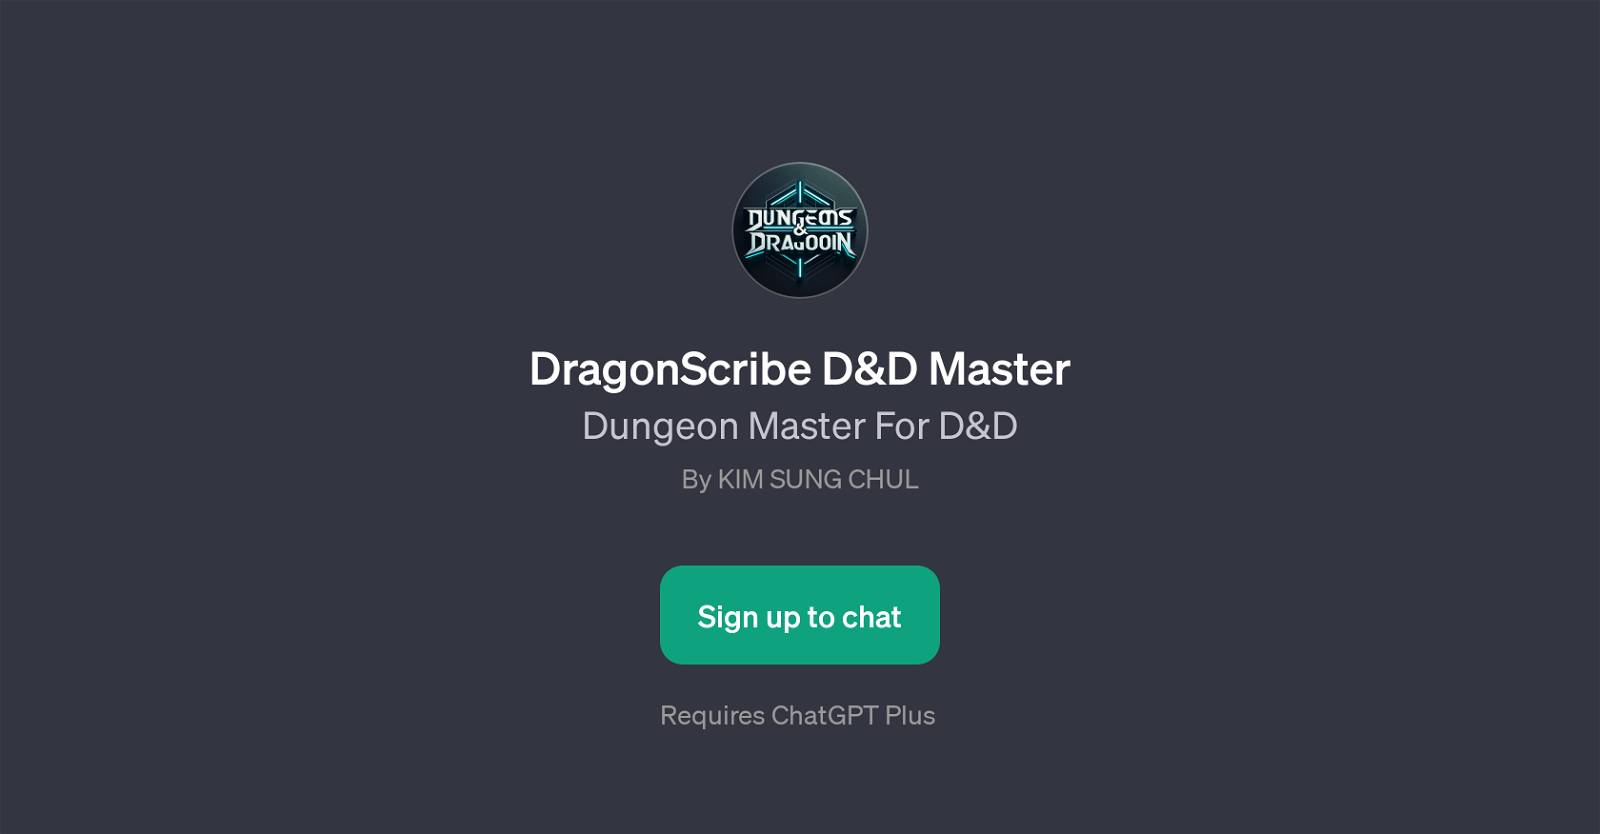 DragonScribe D&D Master website